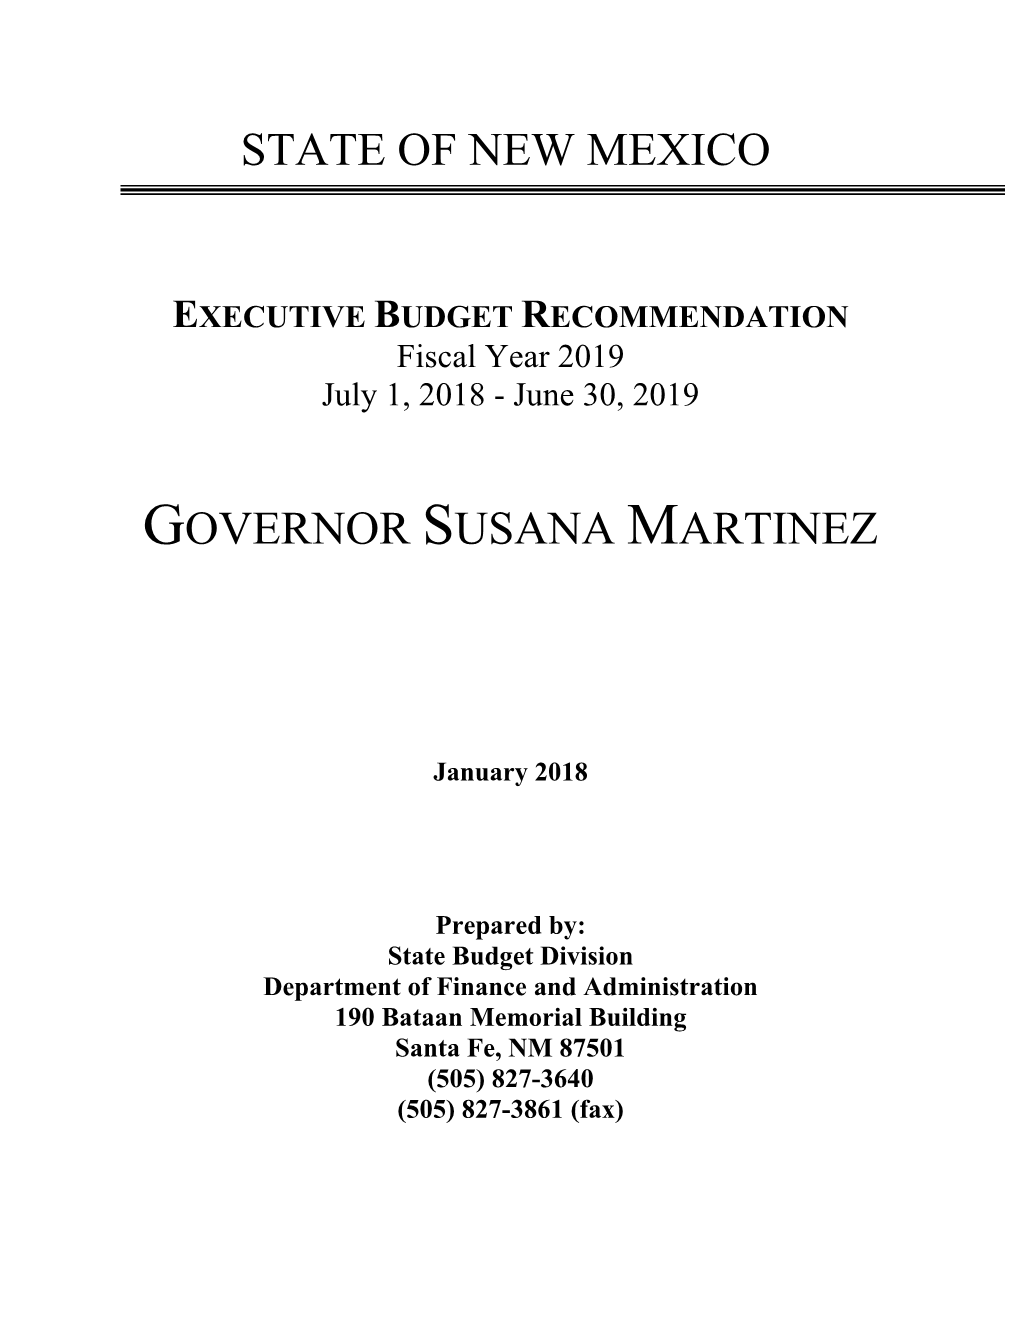 State of New Mexico Governor Susana Martinez